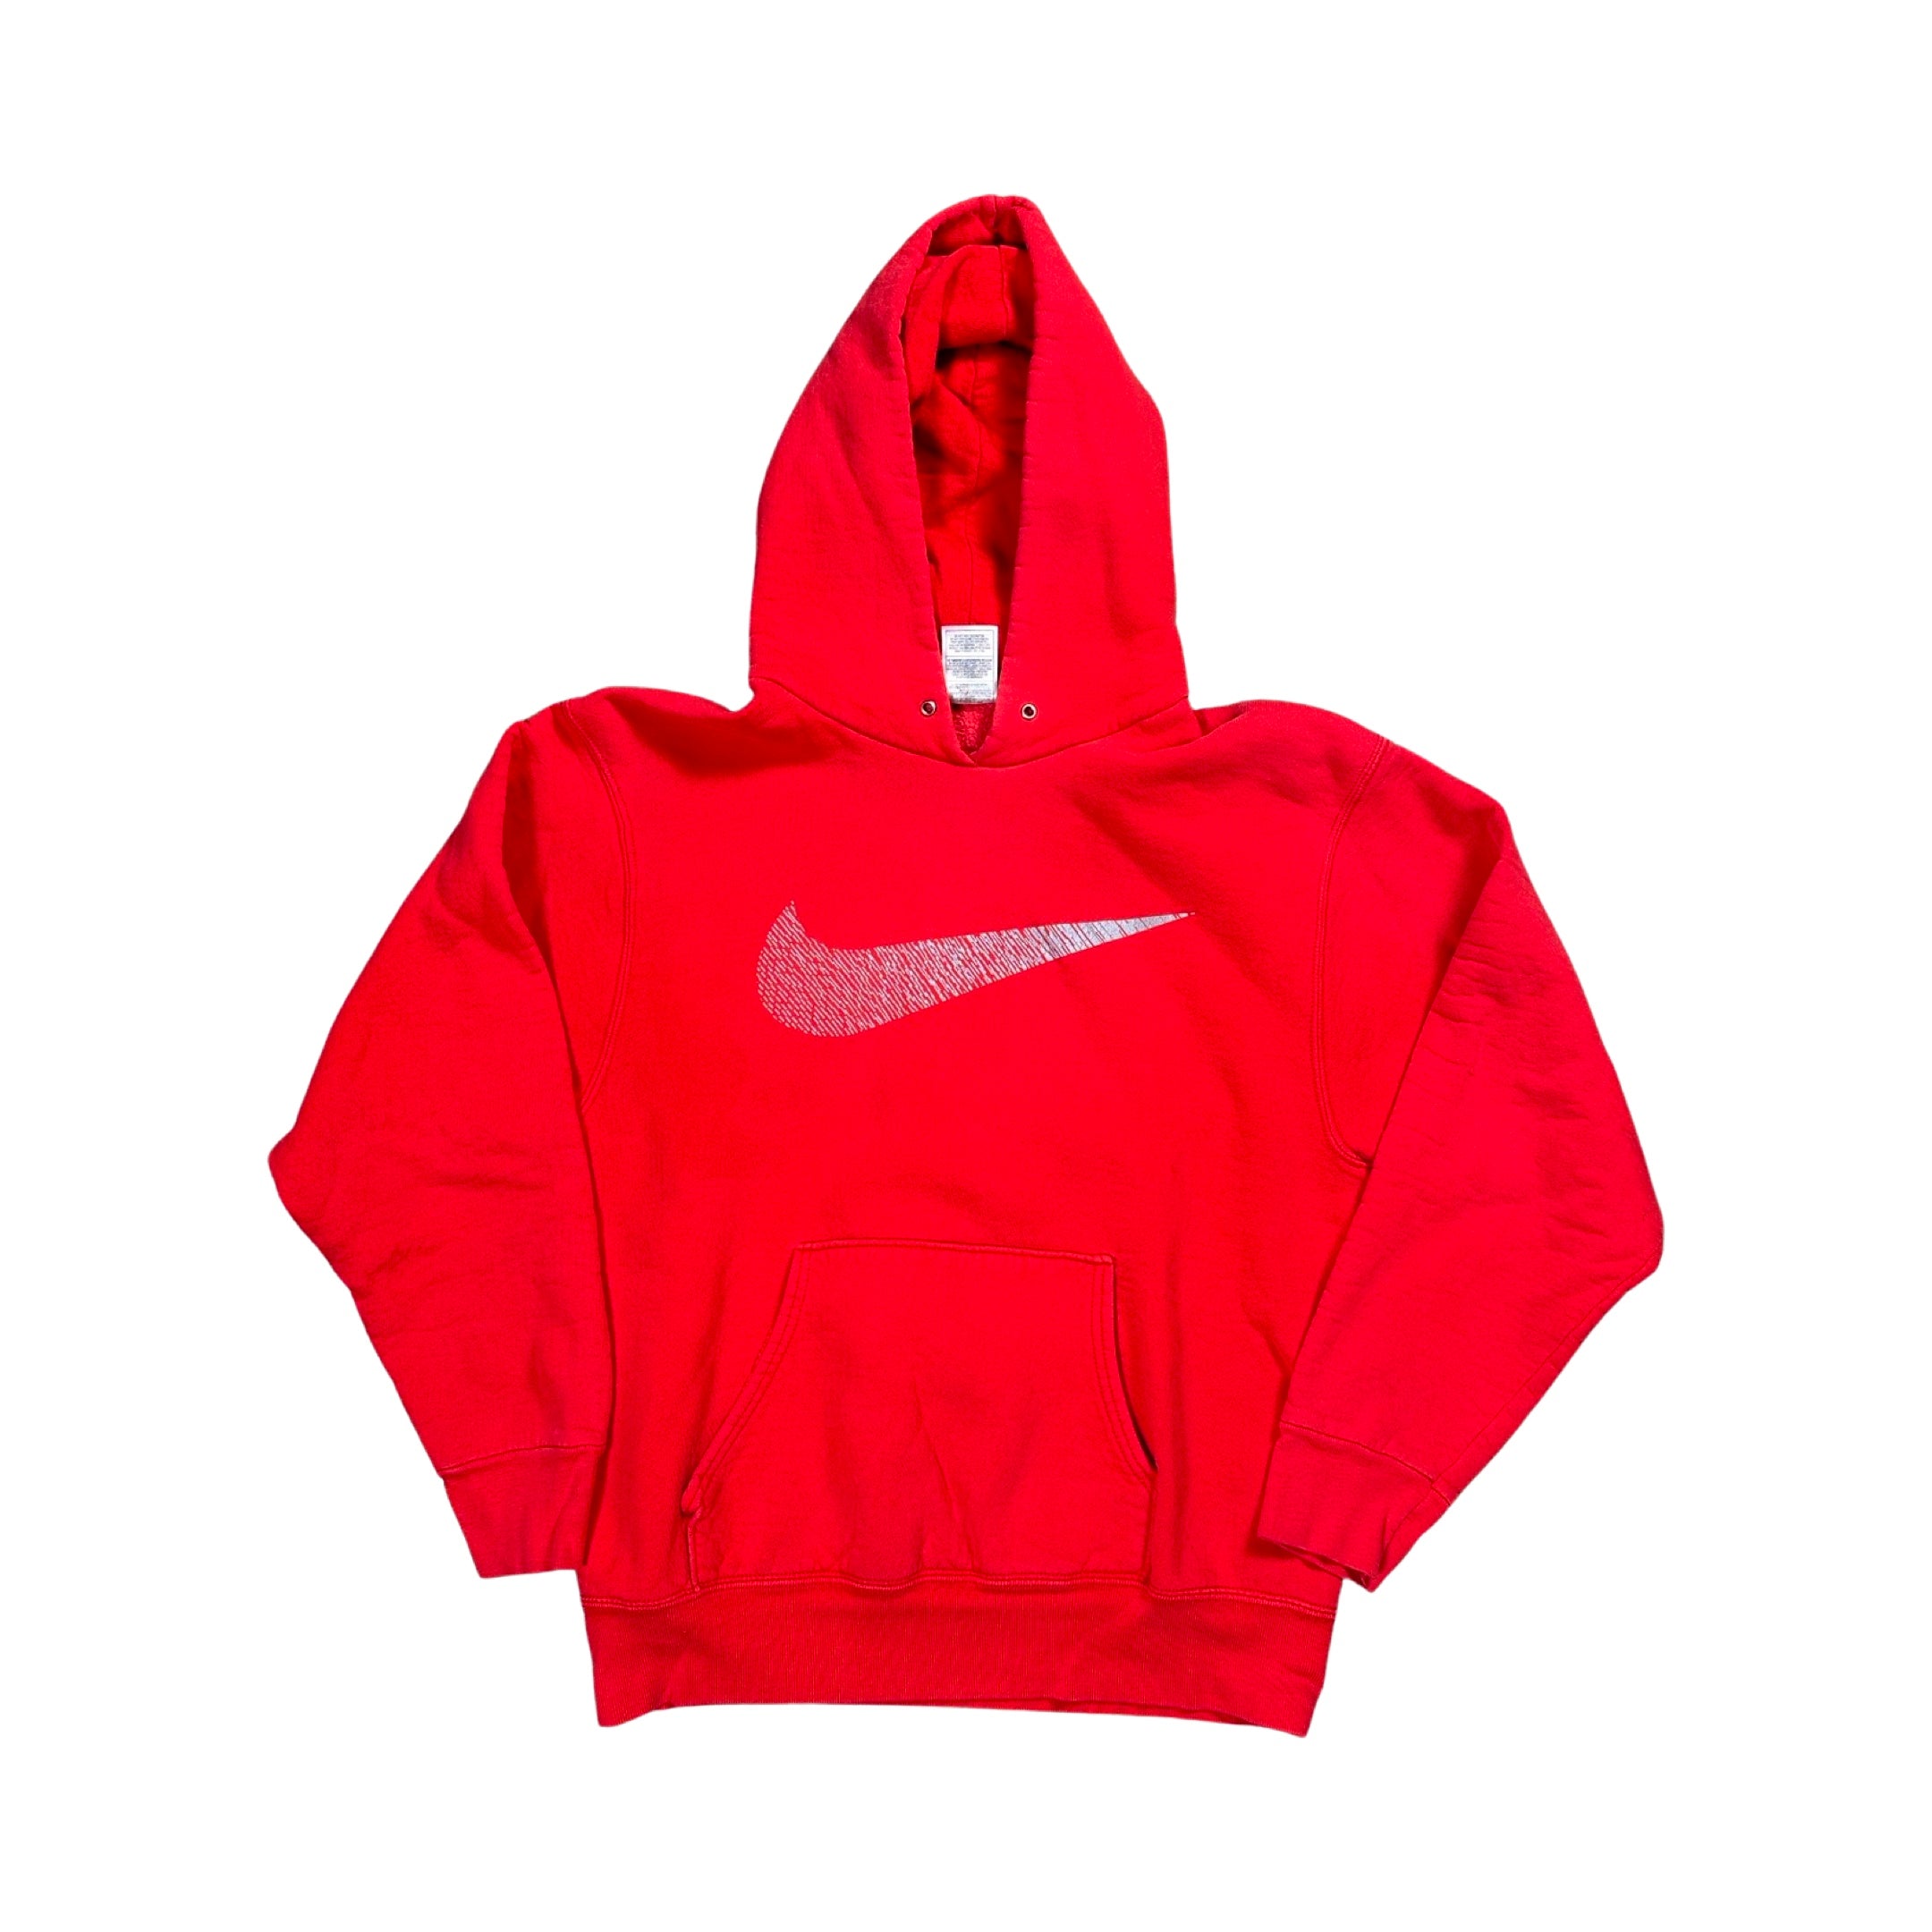 Bootleg Red Nike 90s Hoodie (Small)